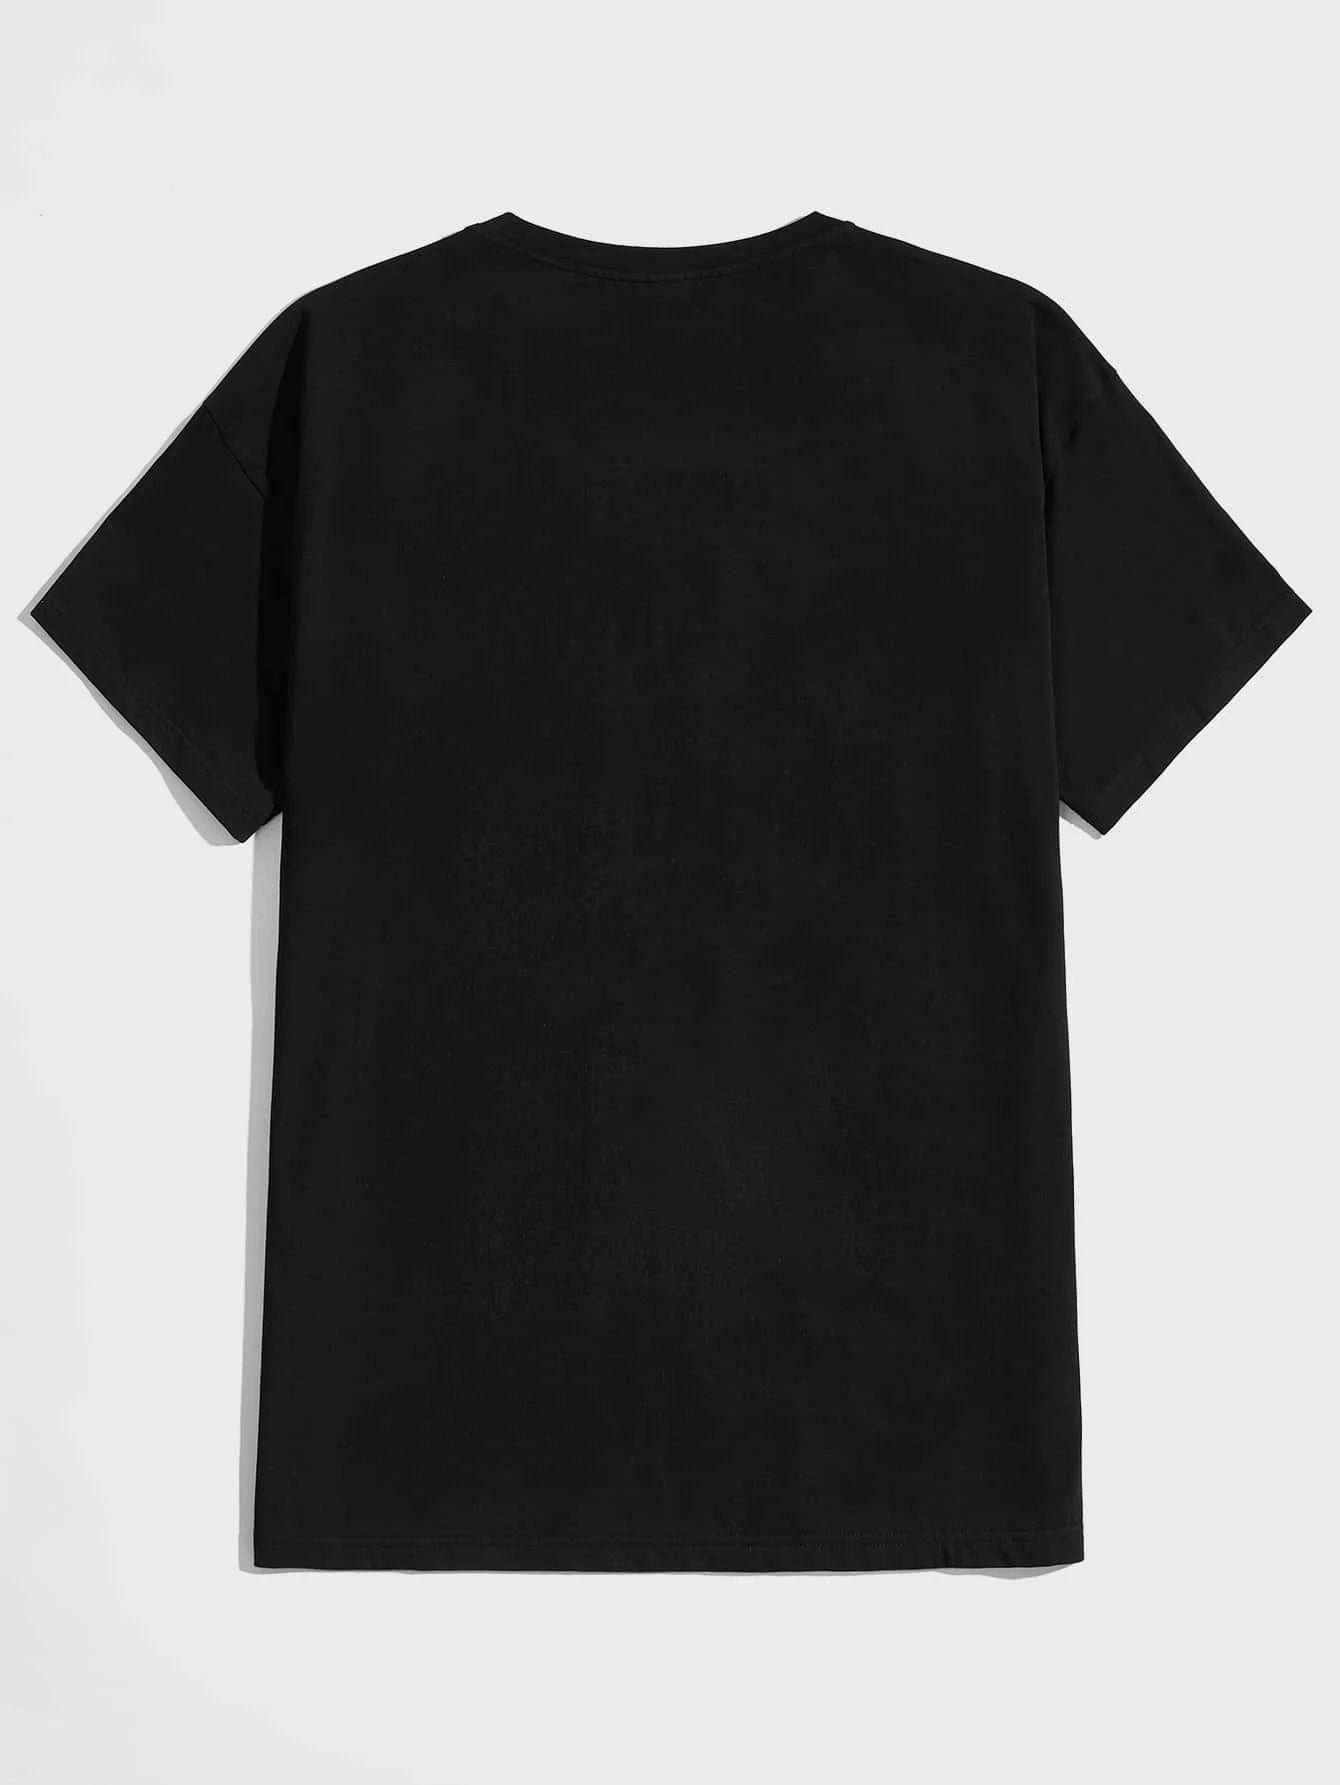 Manlino Men's Black Round Neck Half Sleeve Typography Print T-Shirt